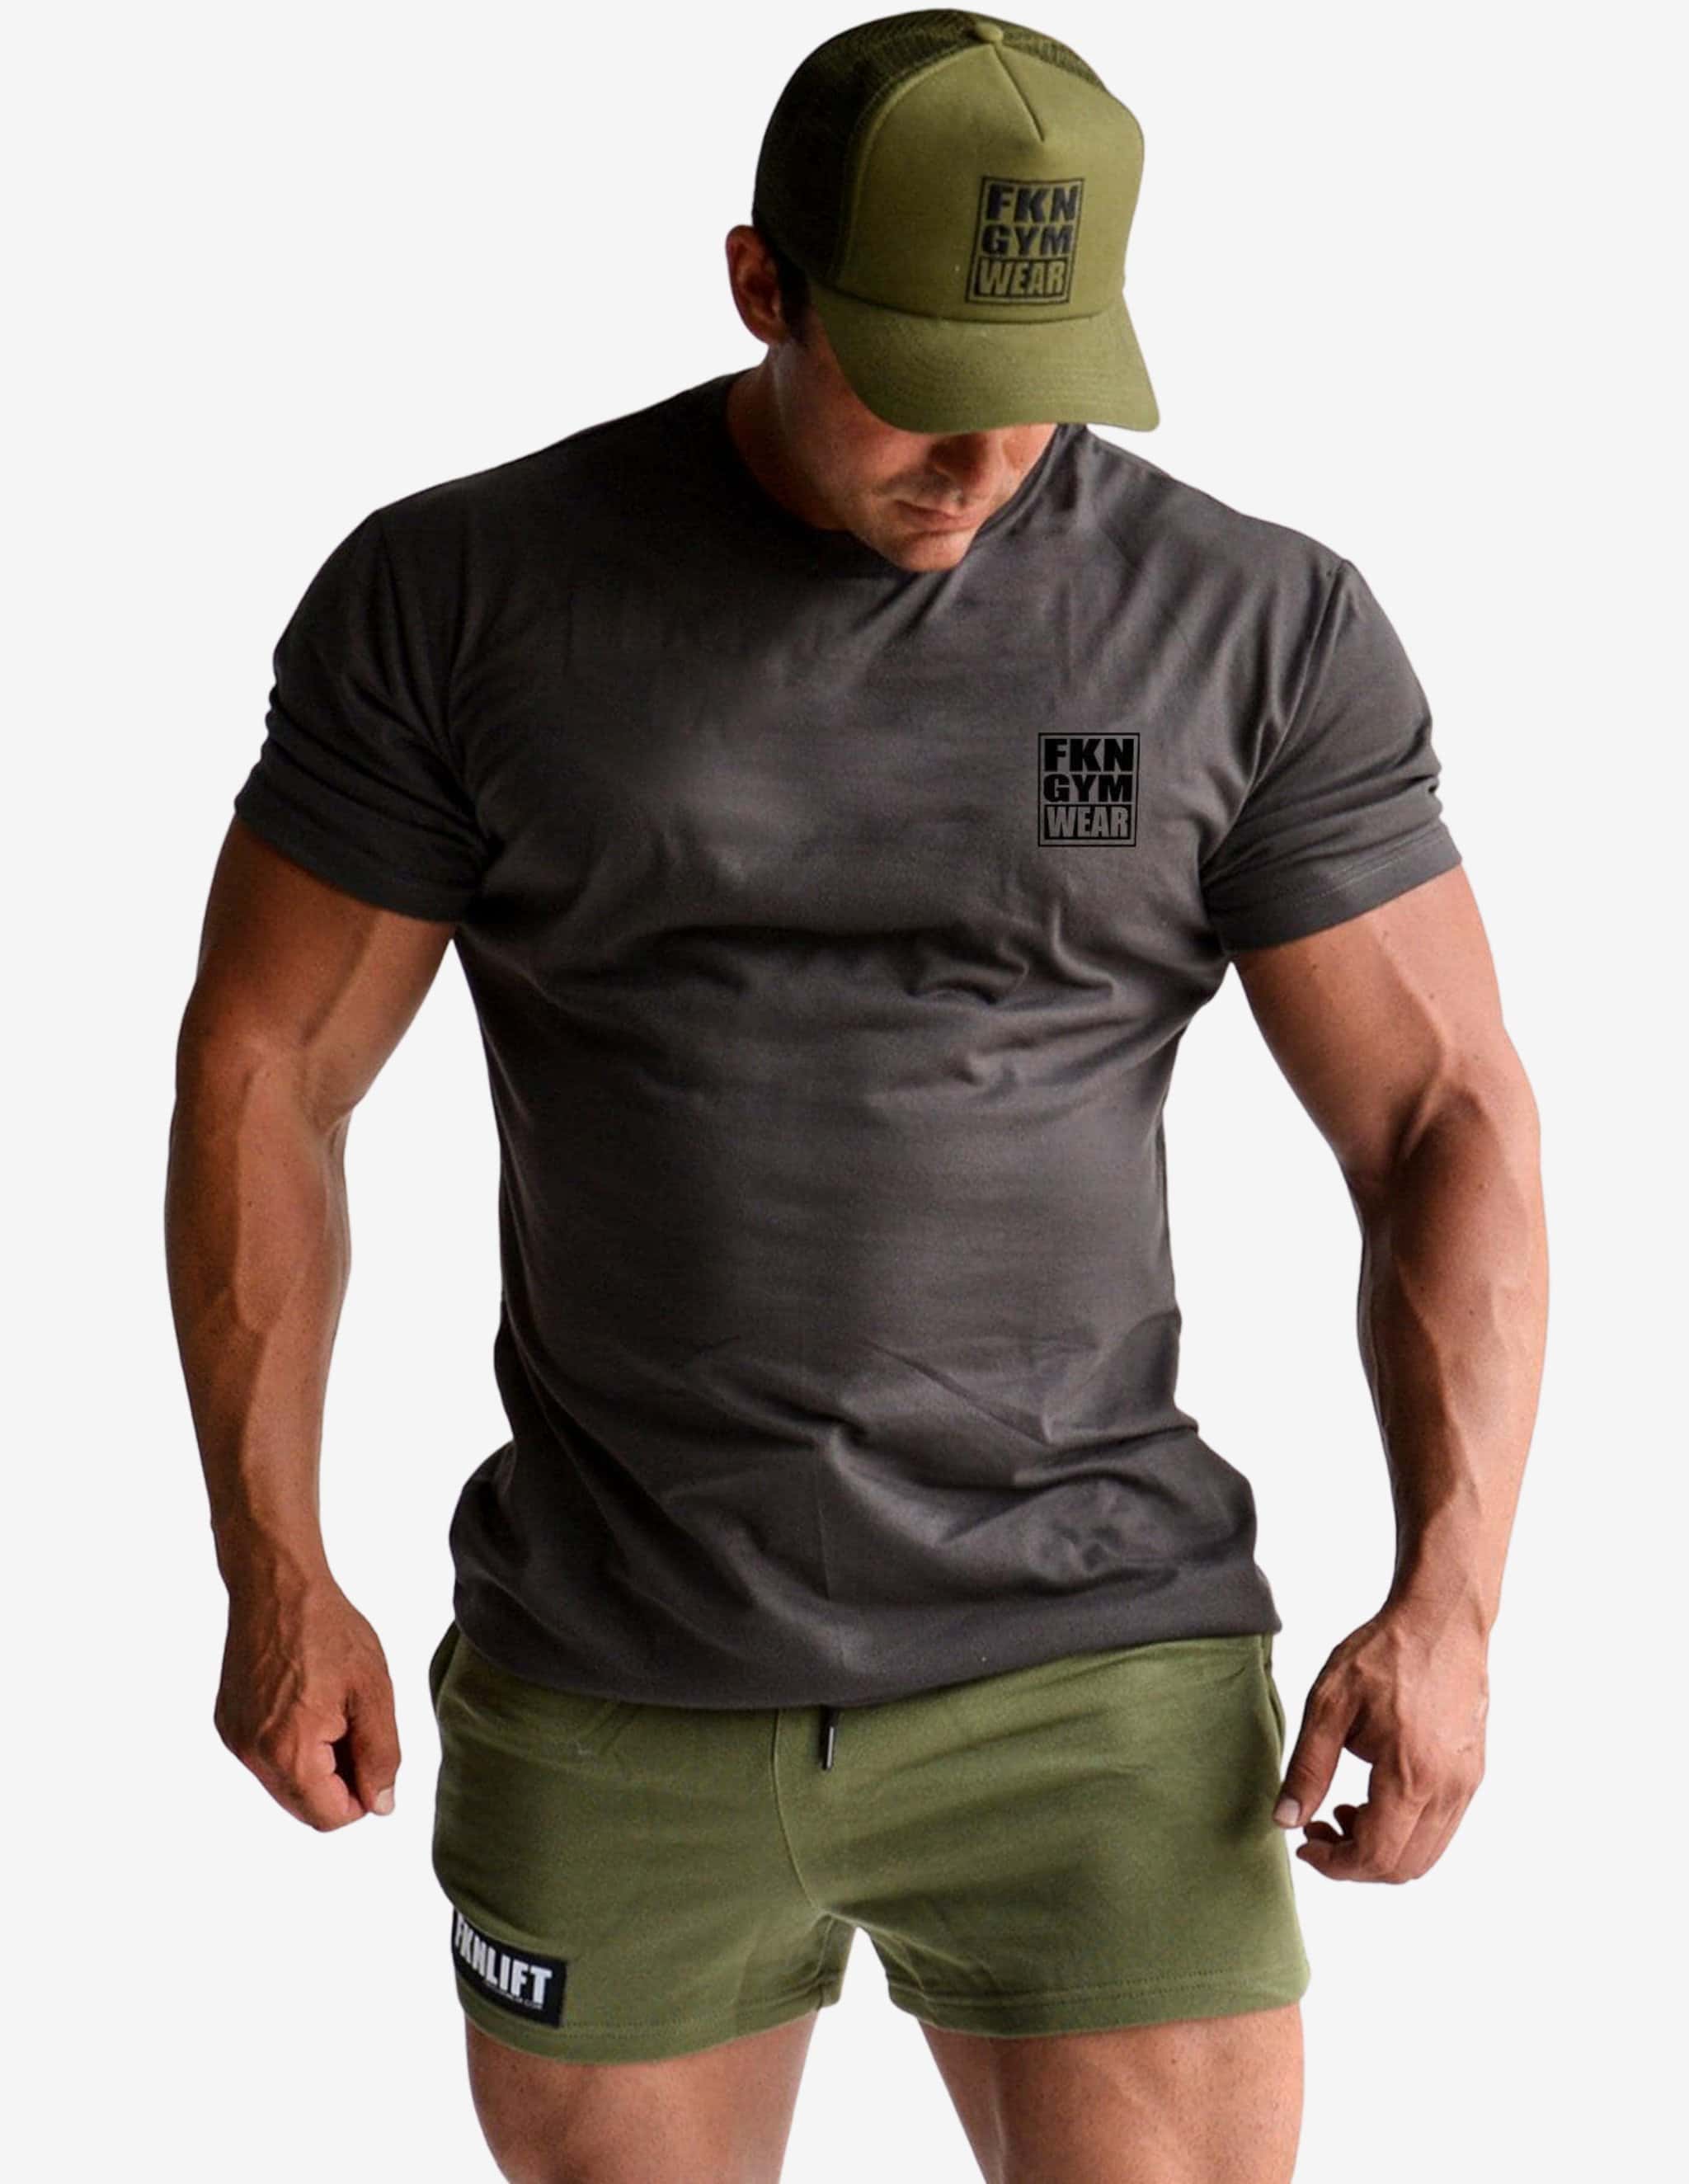 Black-T-shirt Man-FKN Gym Wear-Guru Muscle